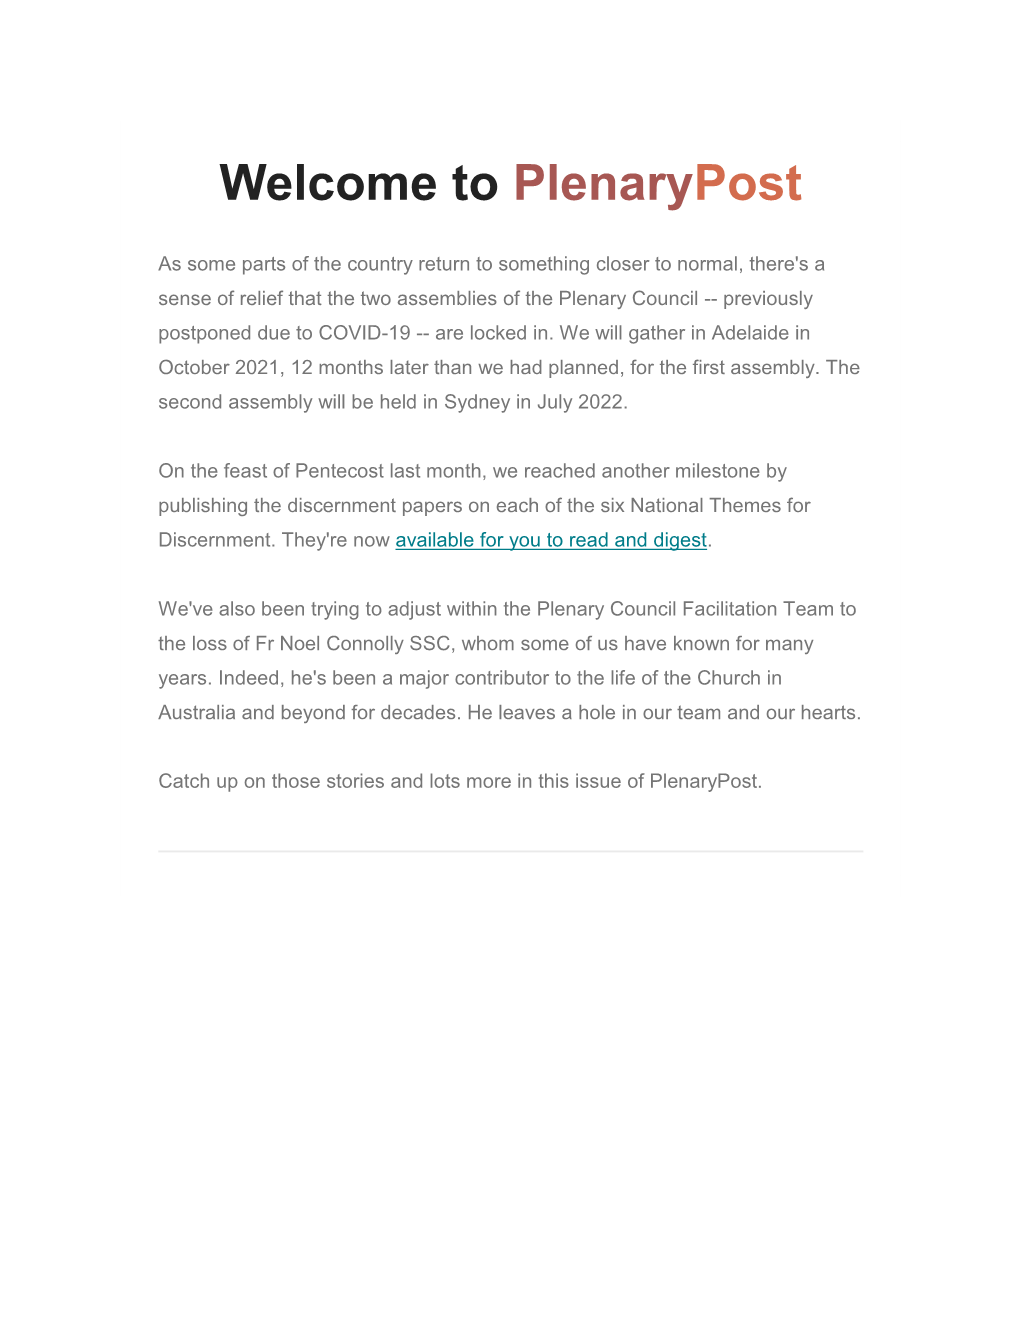 Welcome to Plenarypost